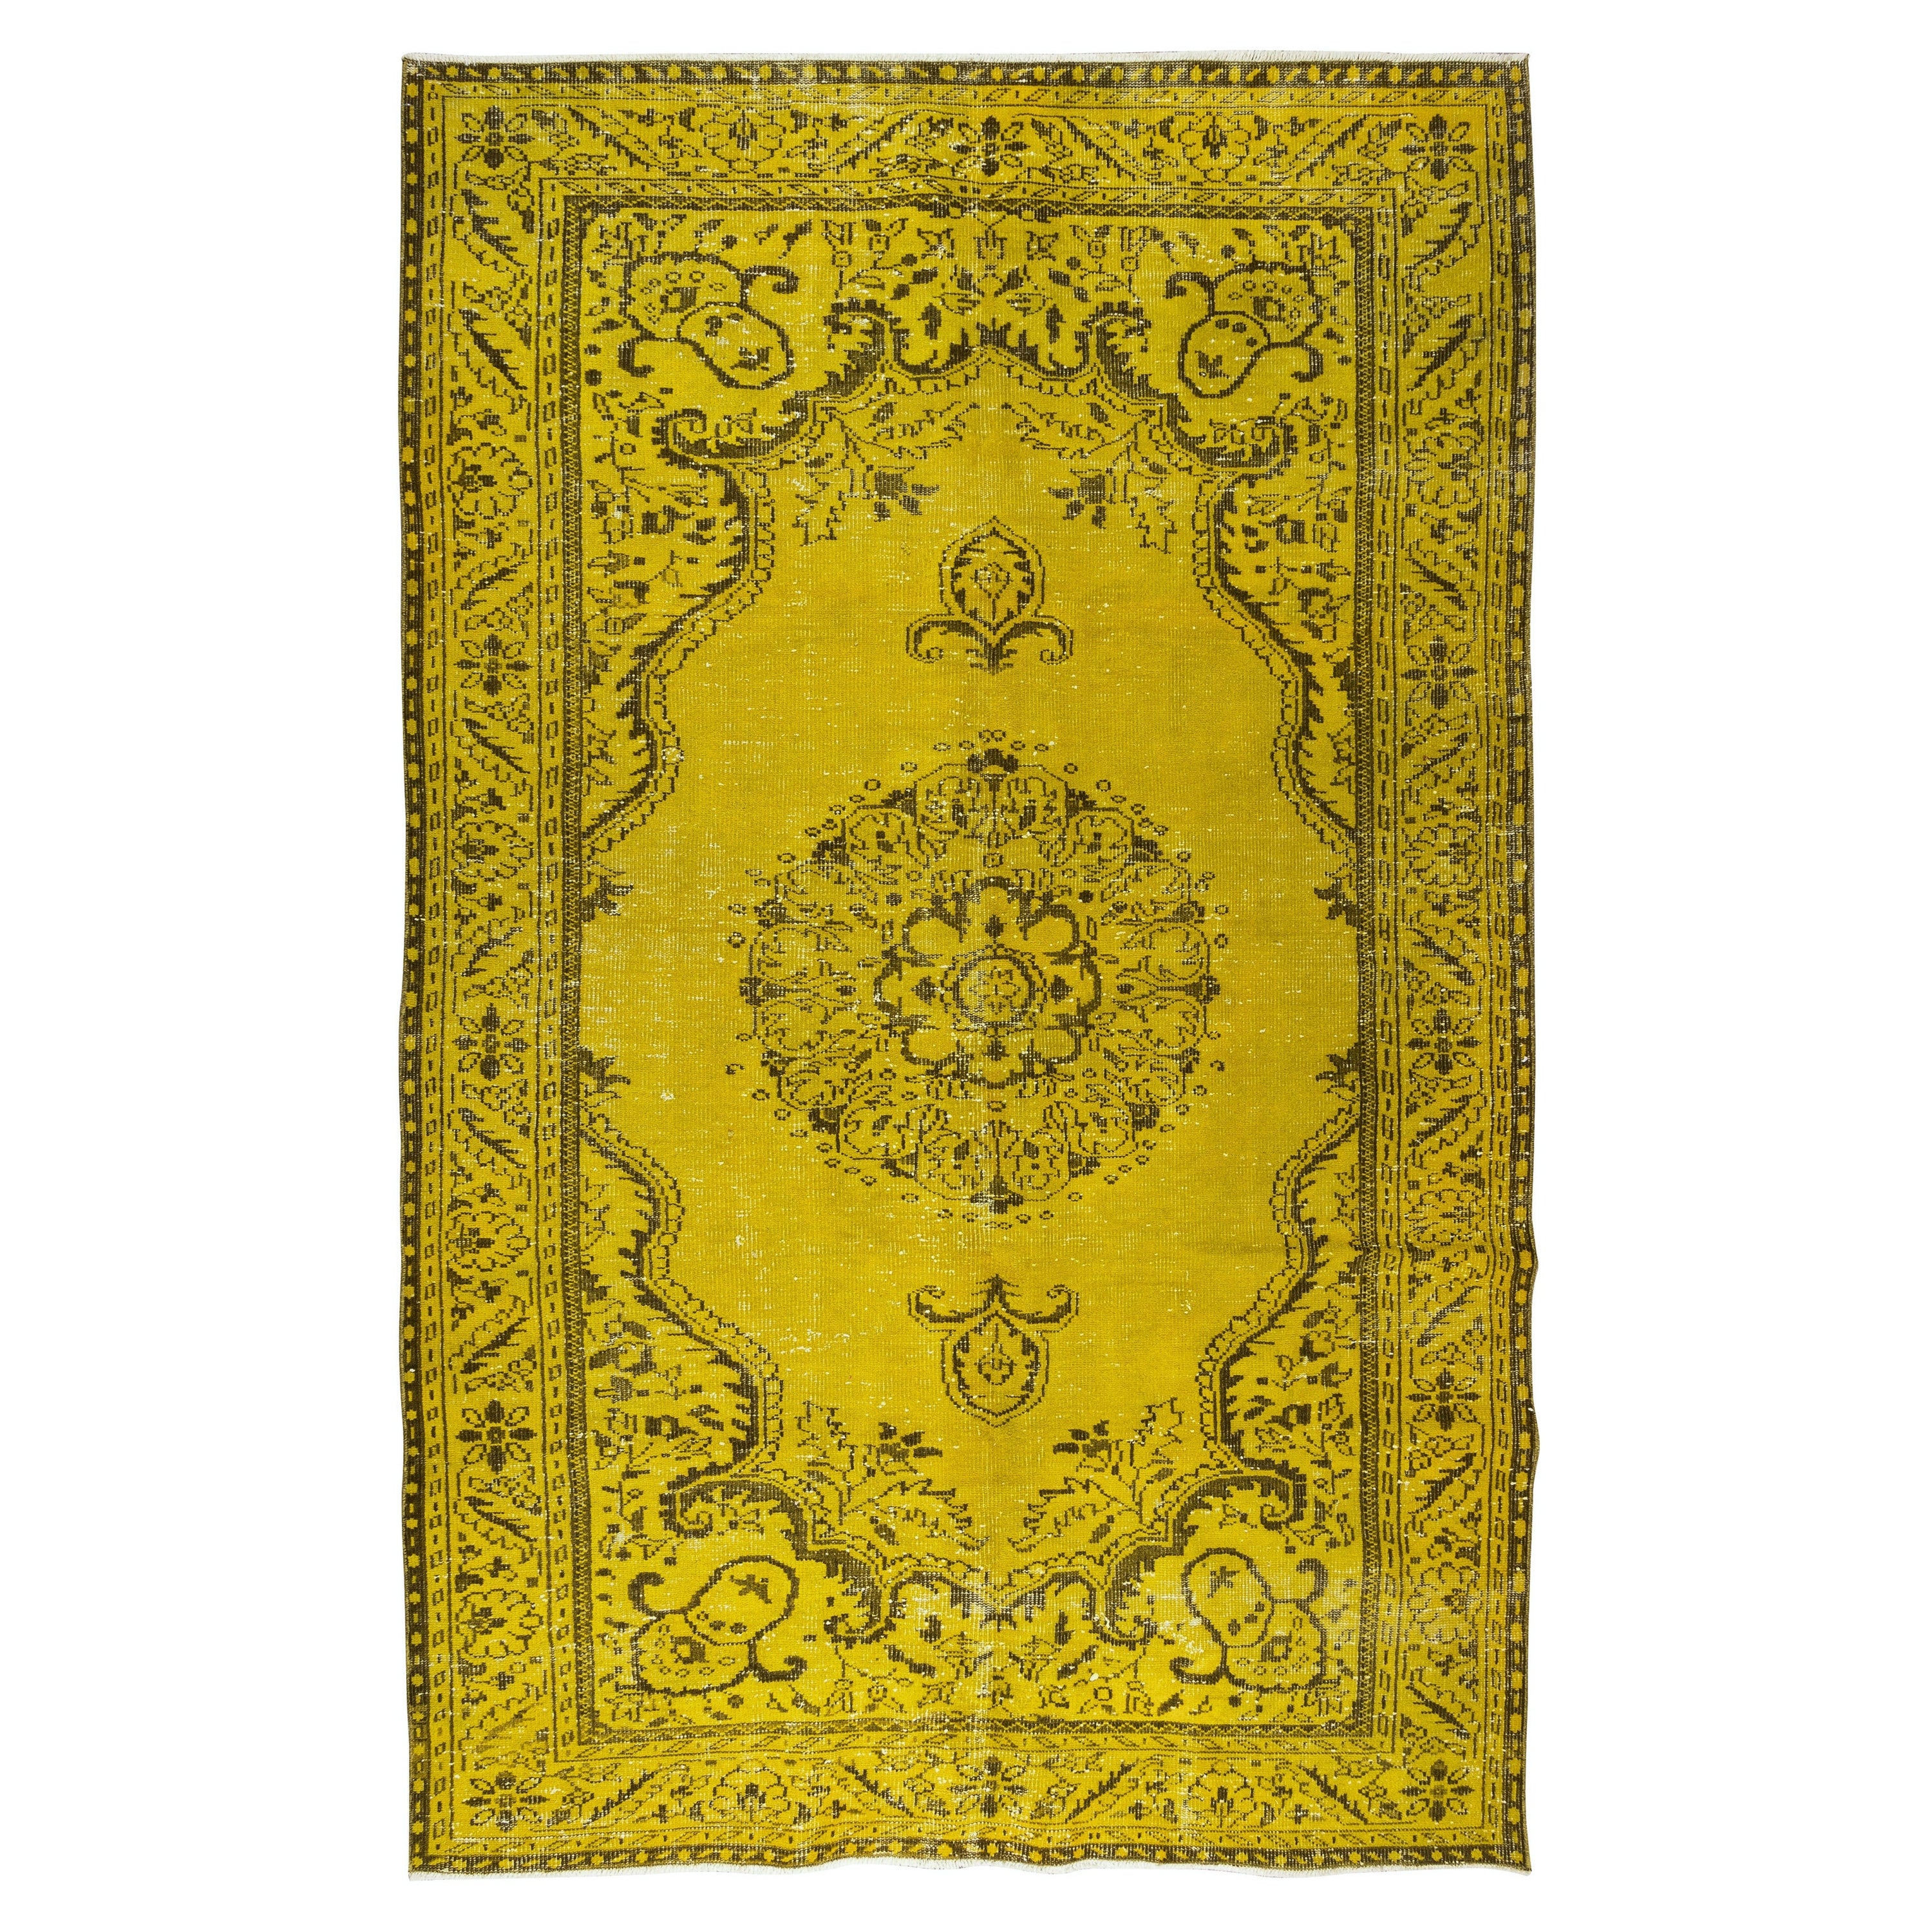 6.2x10.3 Ft Yellow Area Rug. Handmade Turkish Vintage Carpet, Modern Home Decor